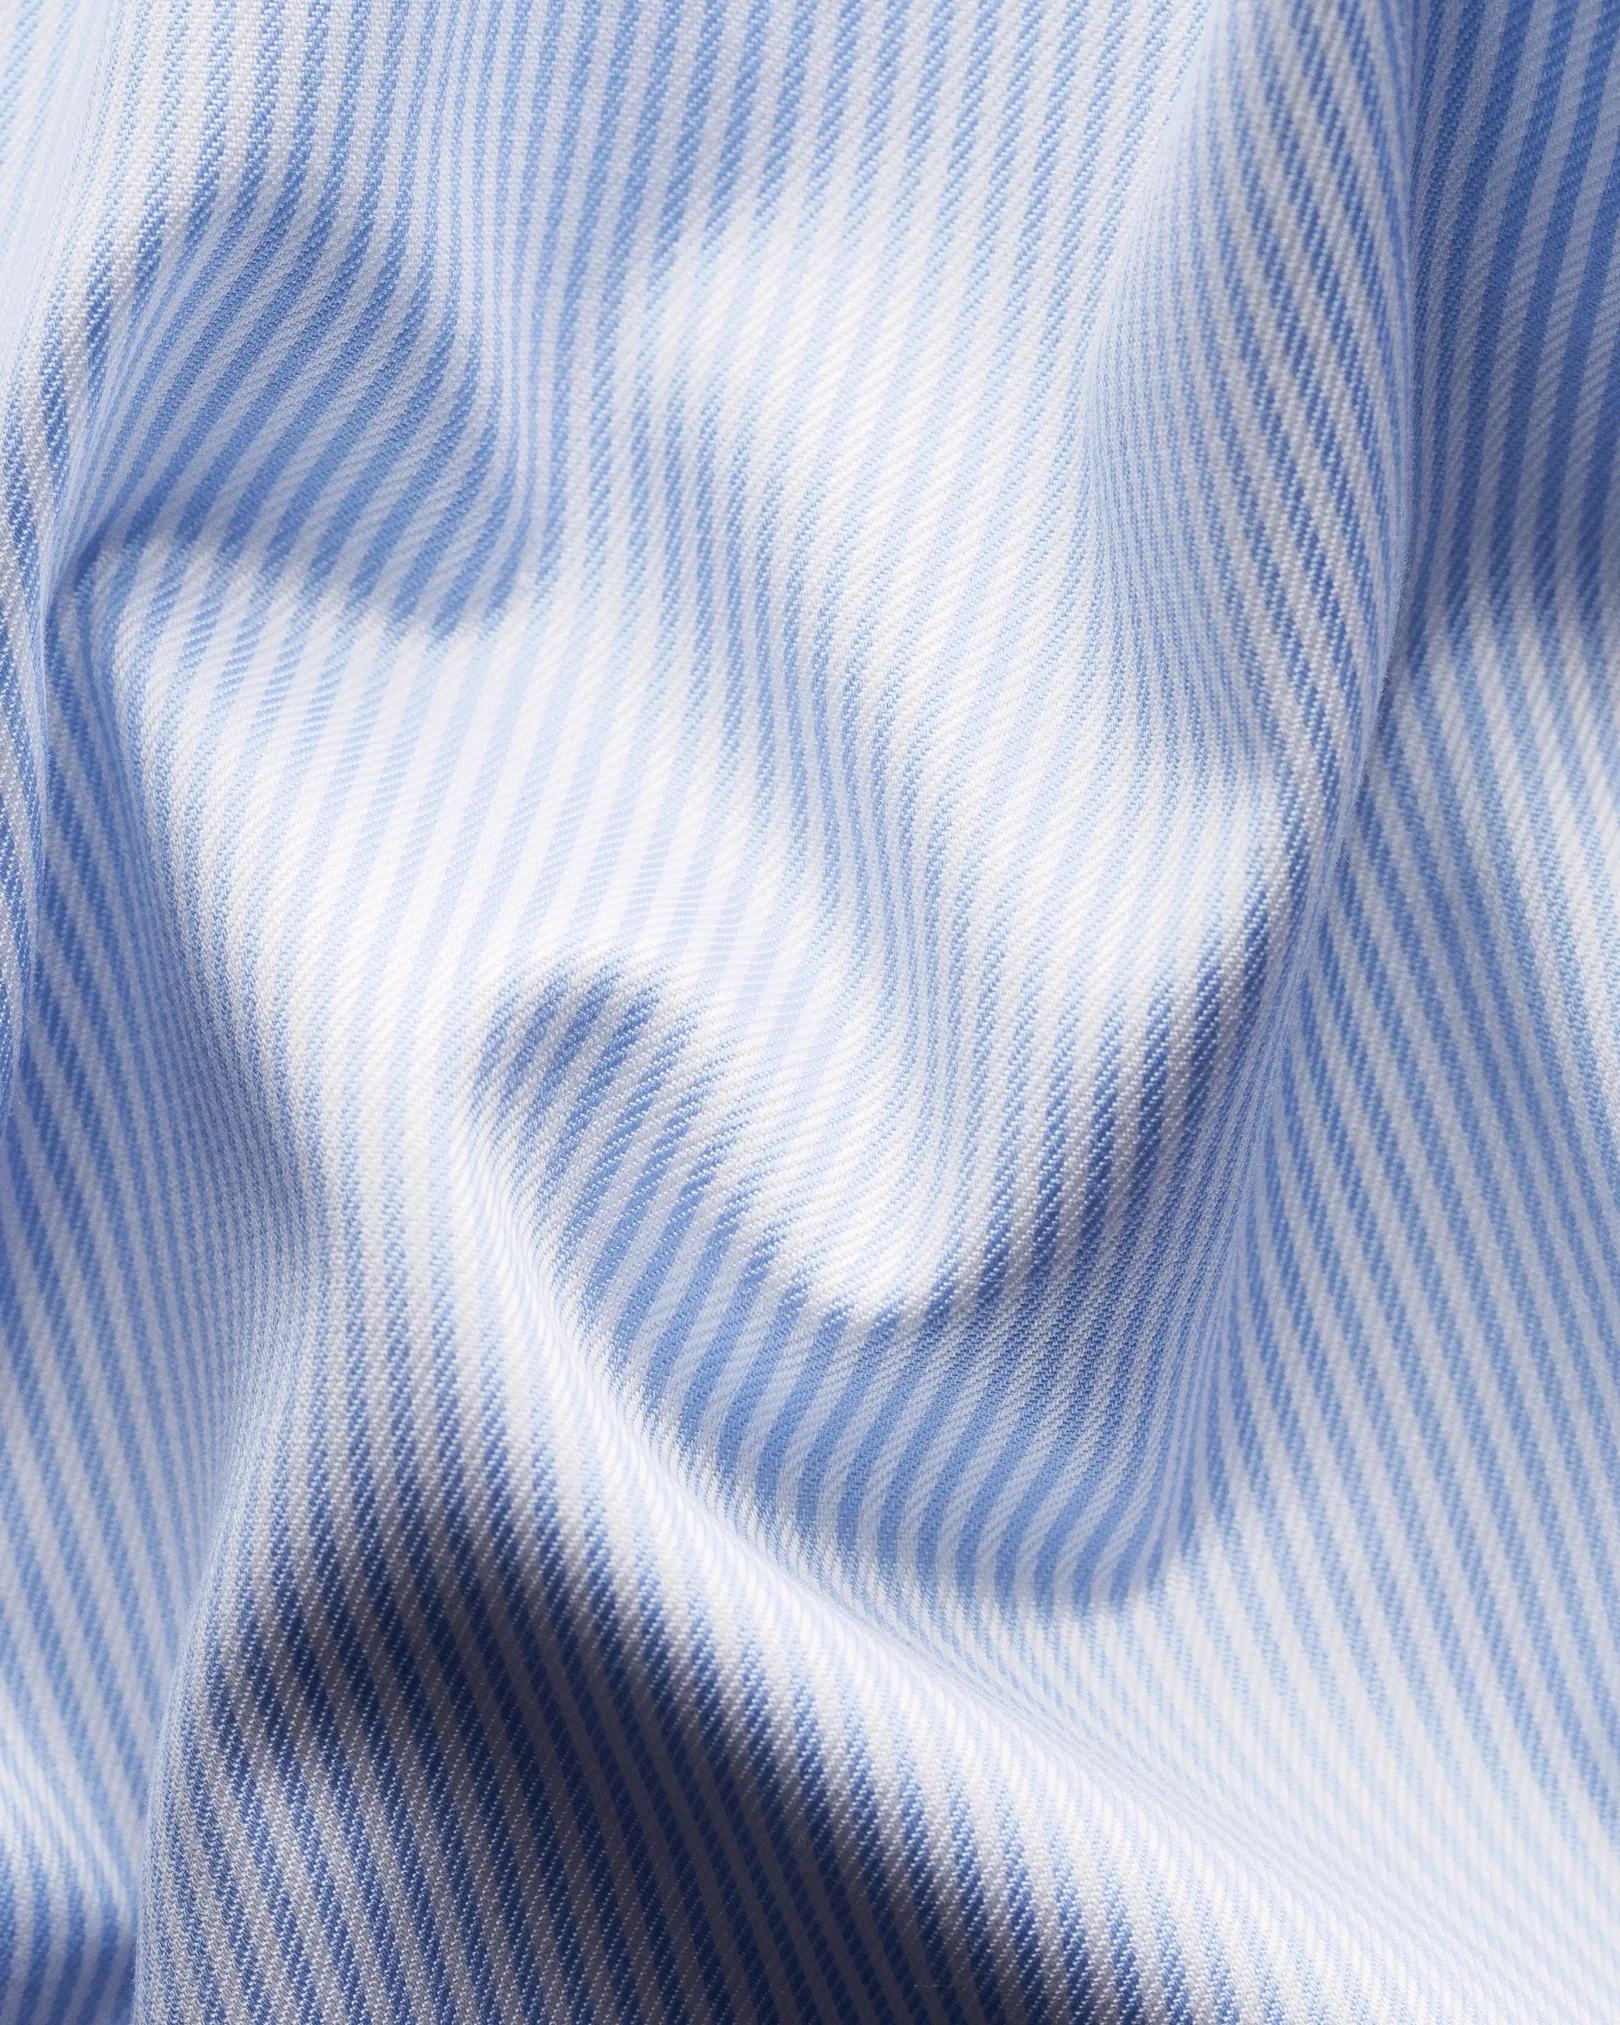 Eton - light blue twill thin striped